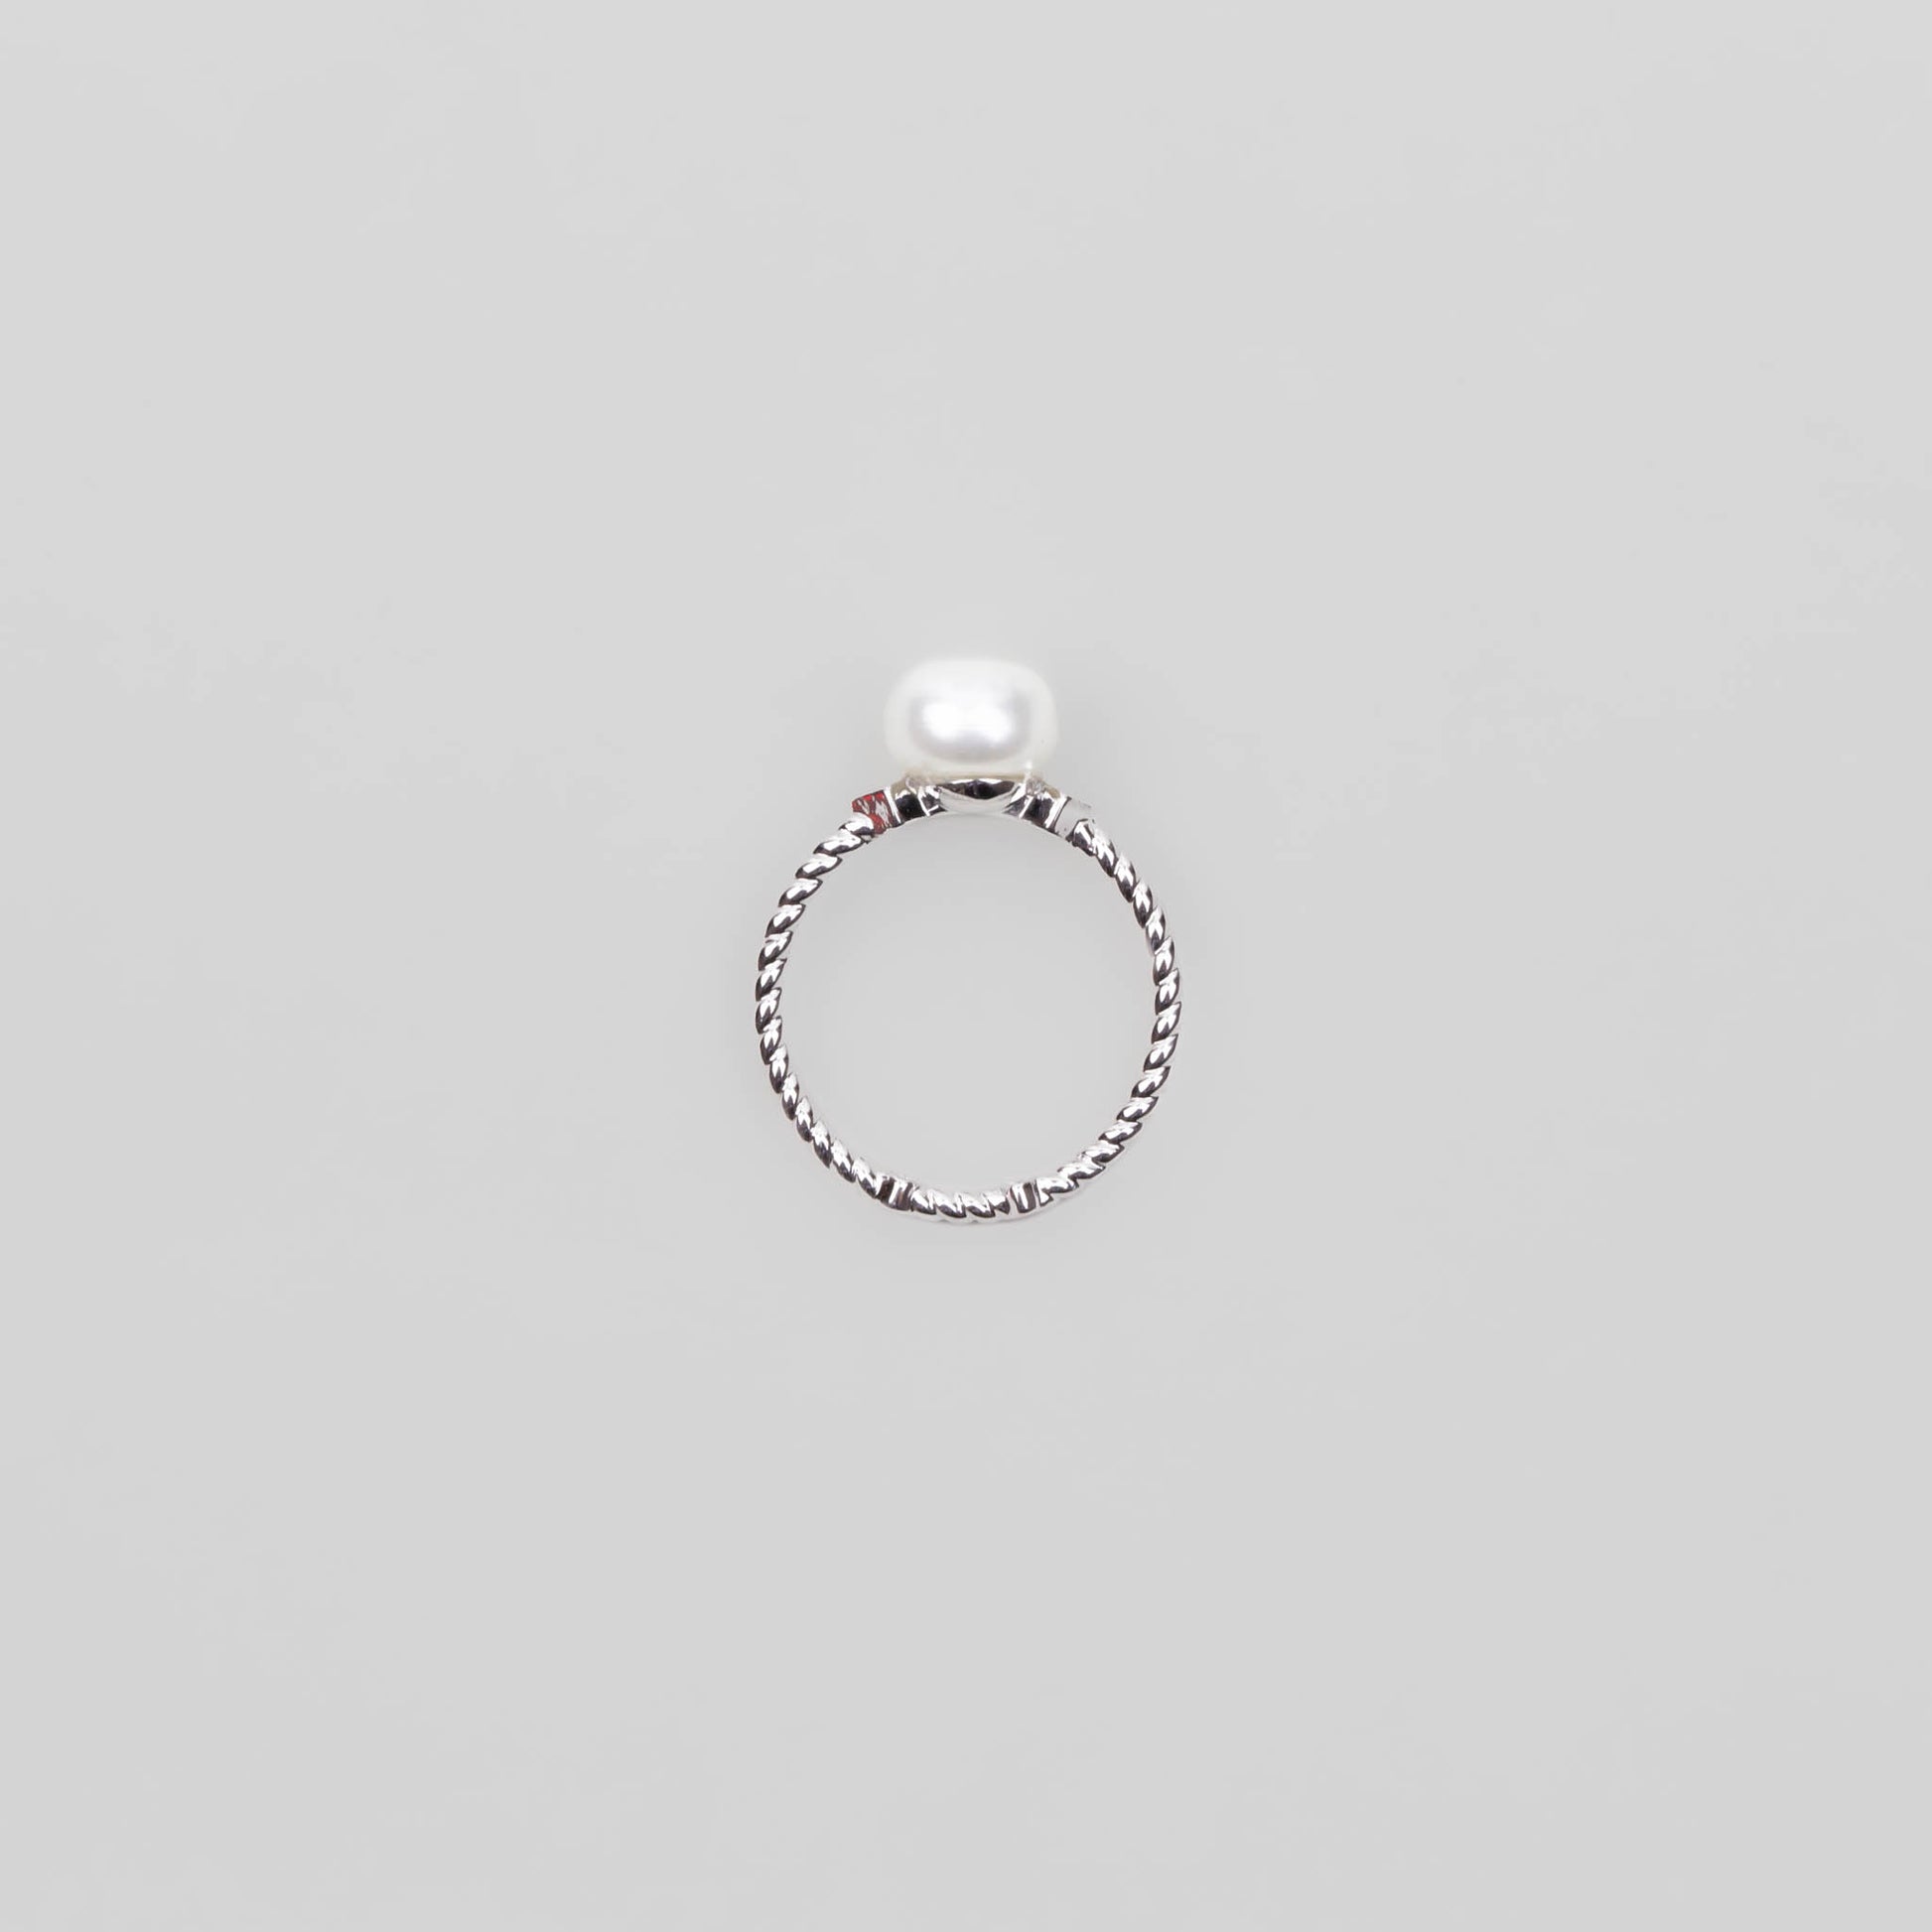 Inel spiralat delicat cu perlă și pietre discrete - Argintiu